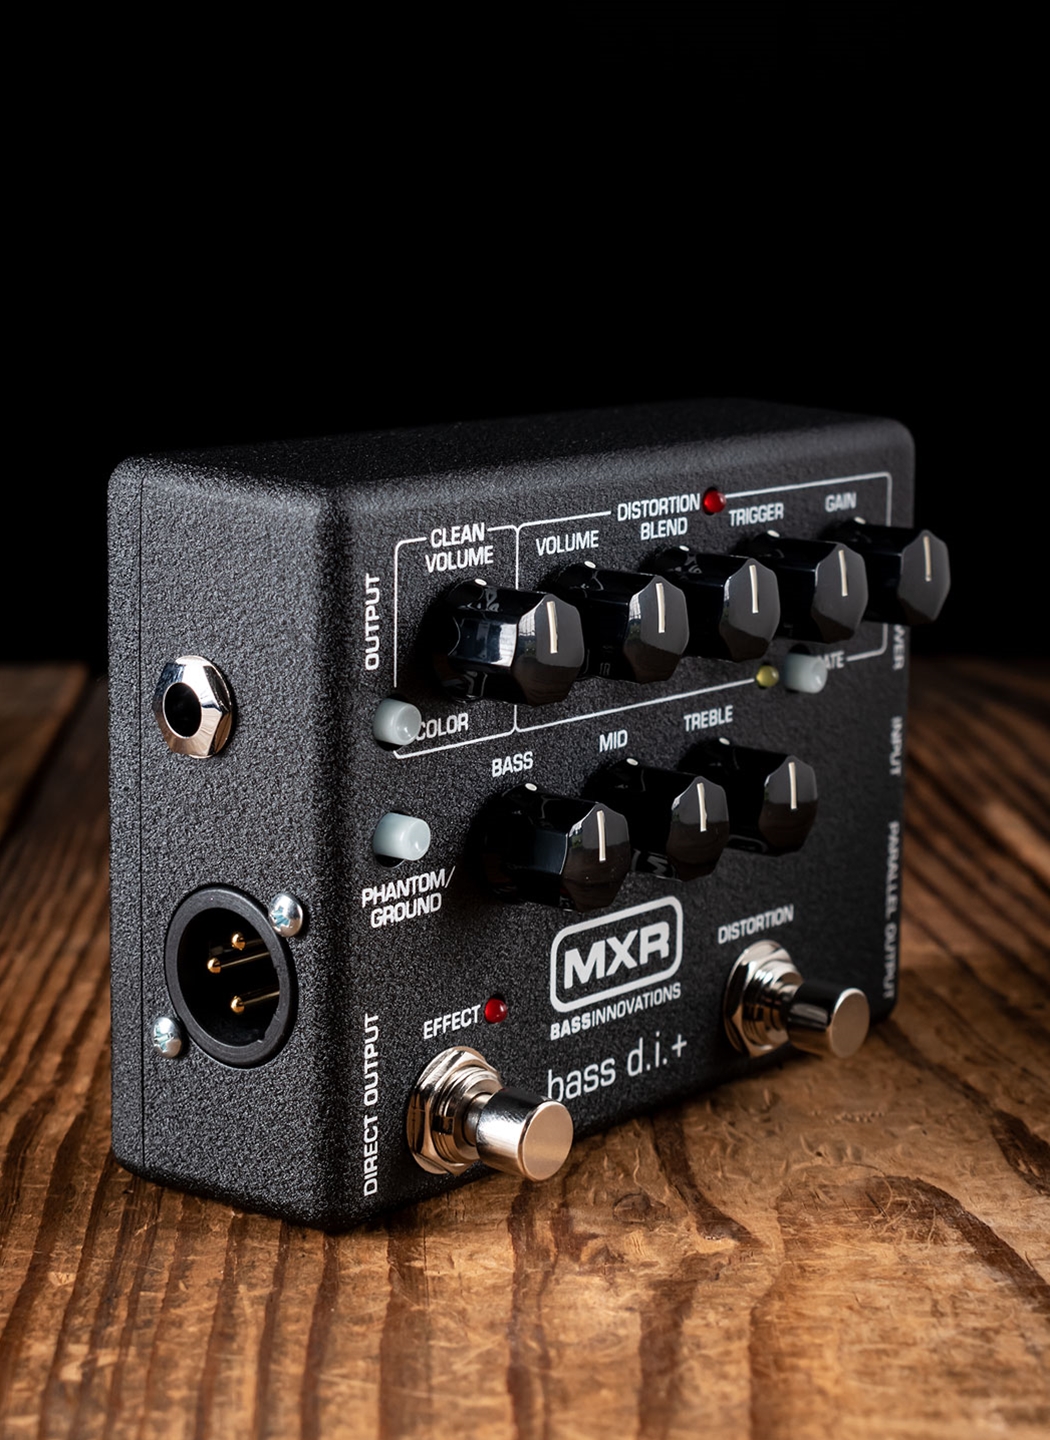 MXR M80 Bass DI+ Distortion Pedal